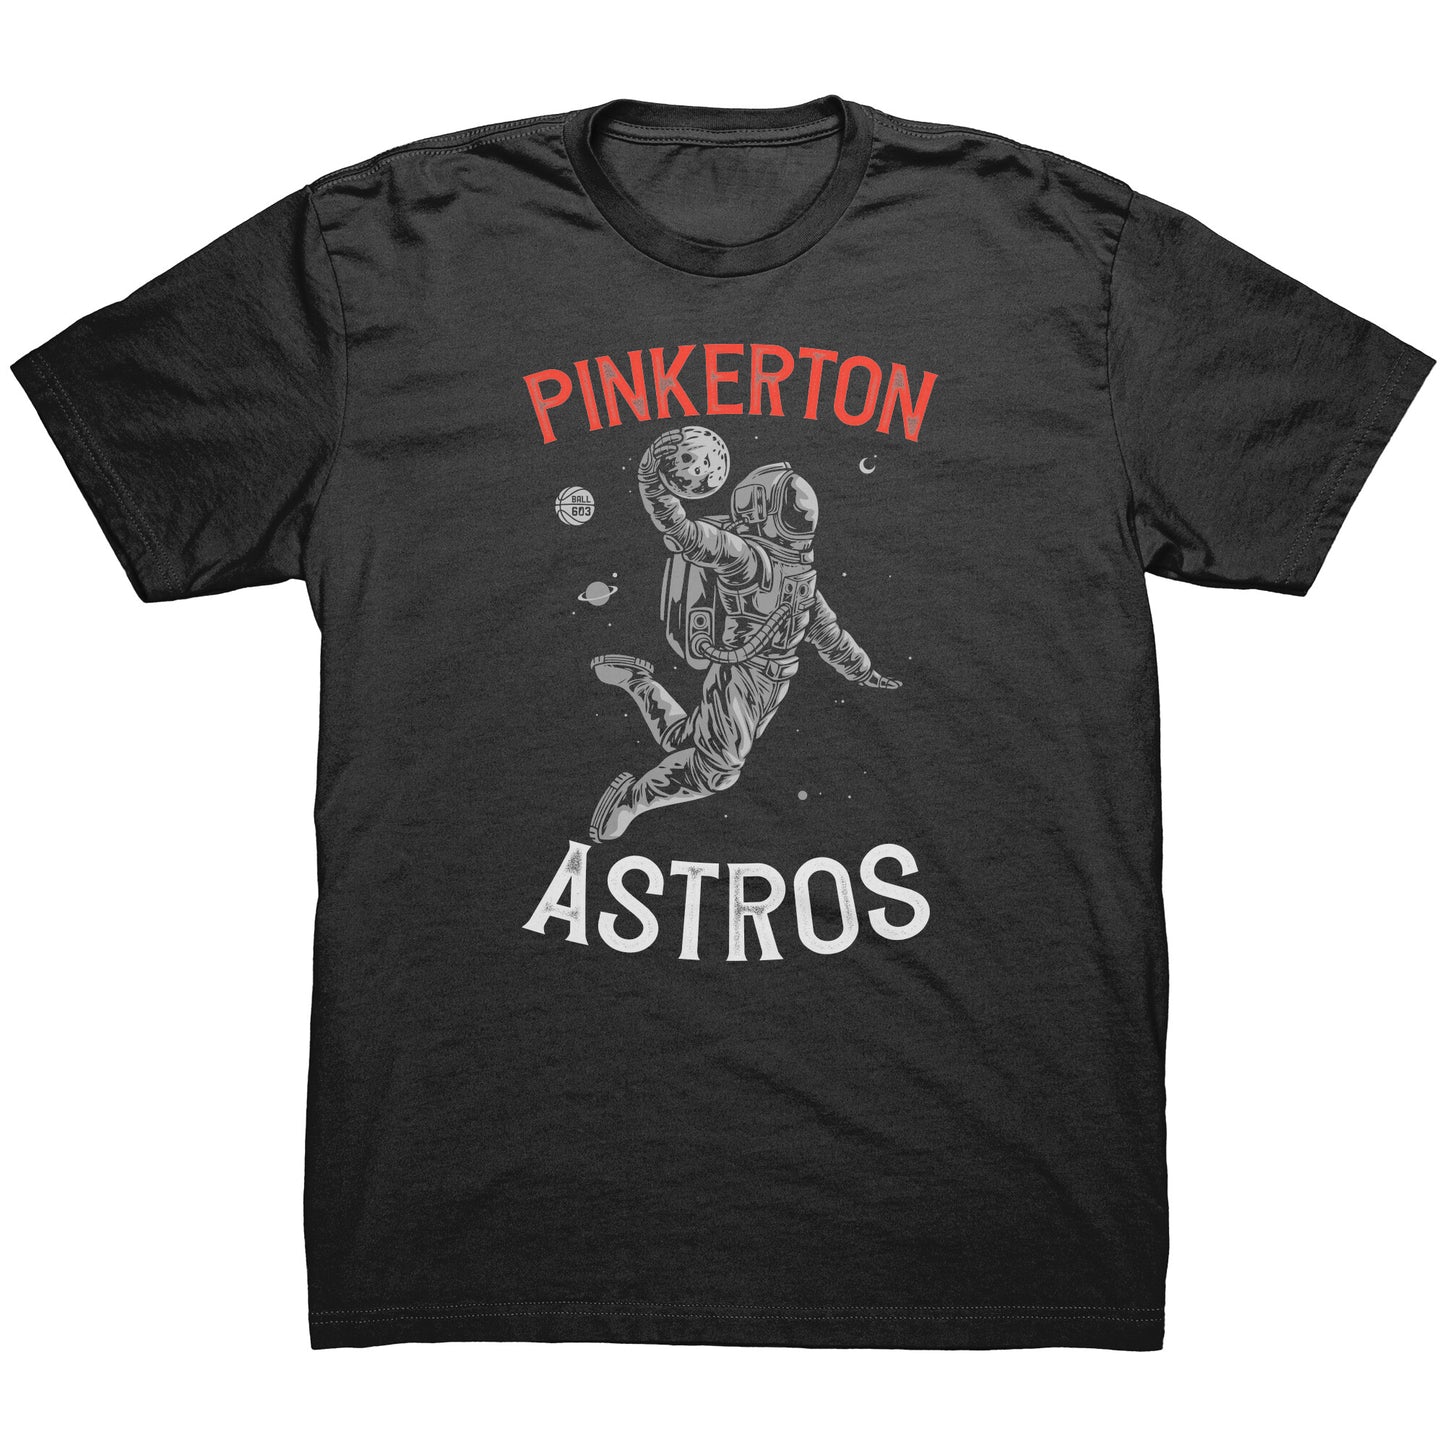 Pinkerton Astros (Men's Cut)